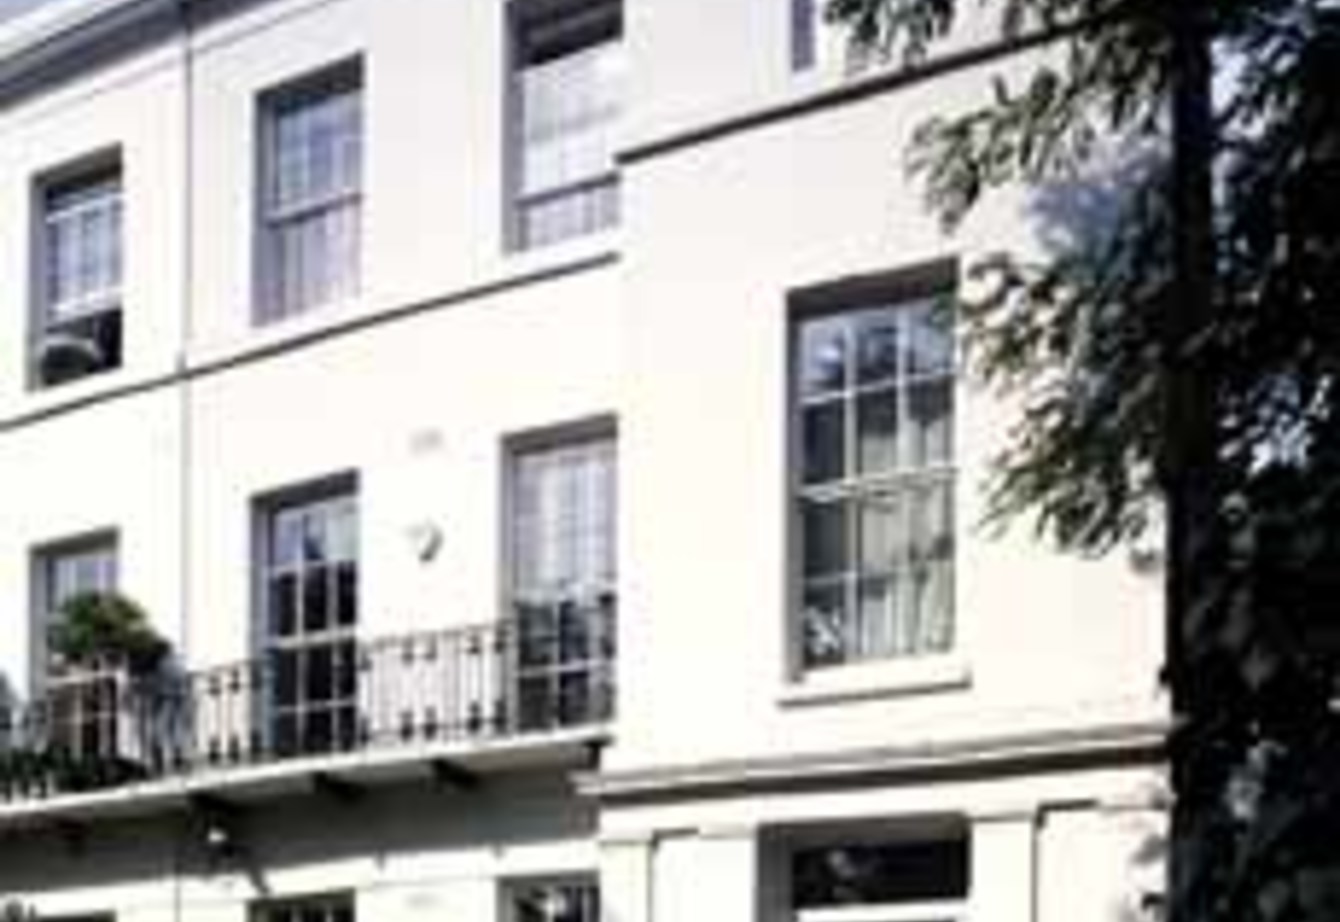 sold-hamilton-terrace-london-189-view1